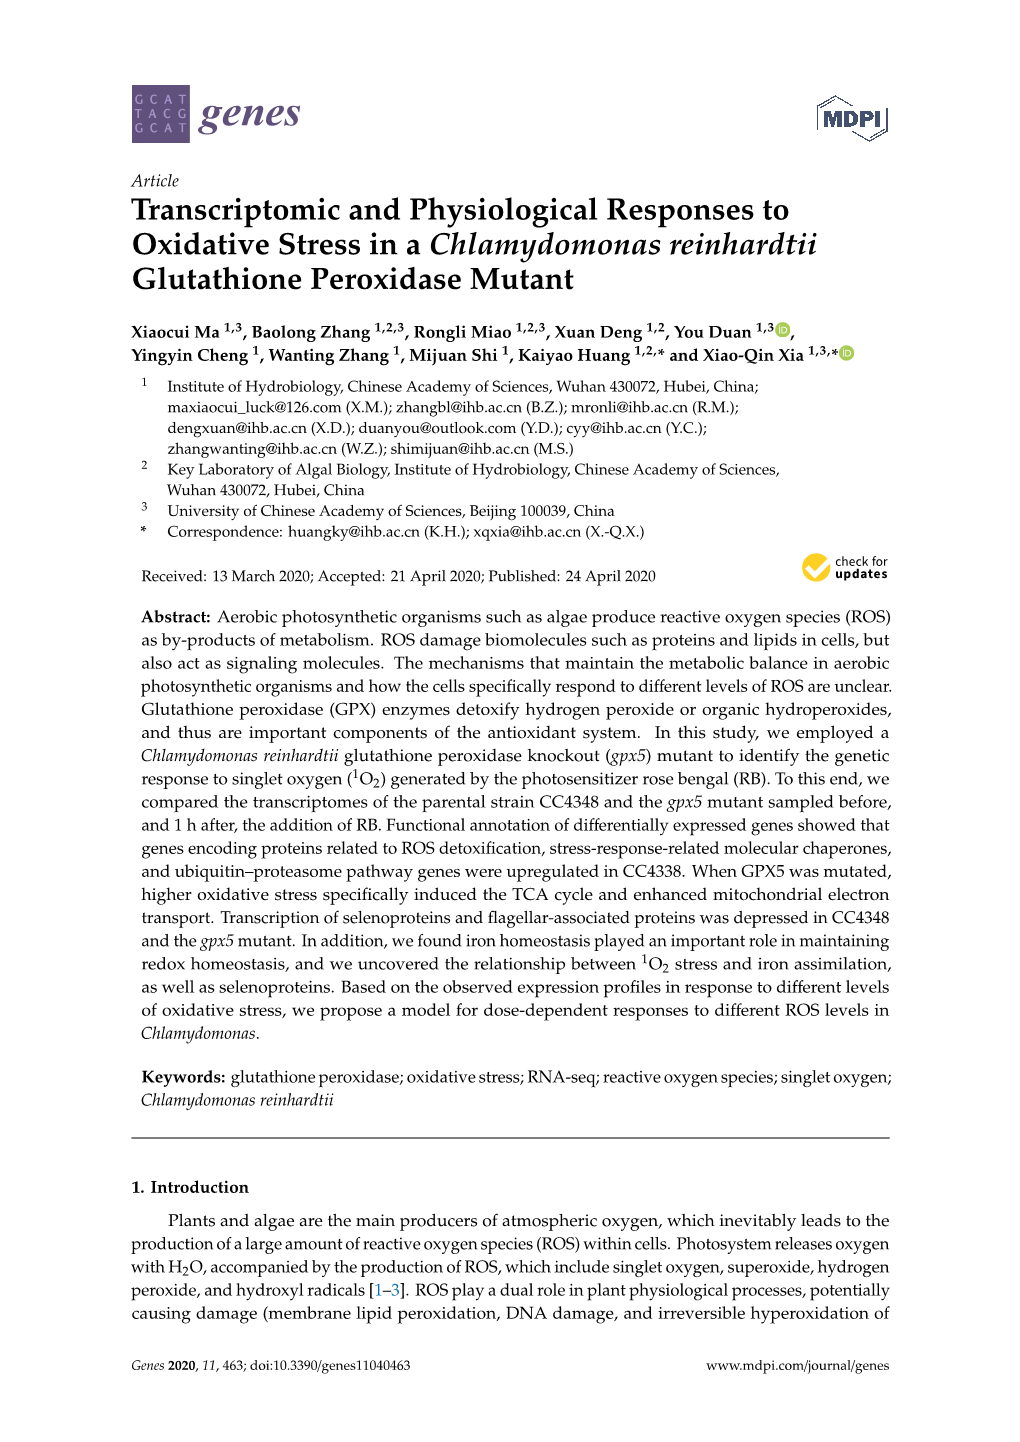 Transcriptomic and Physiological Responses to Oxidative Stress in a Chlamydomonas Reinhardtii Glutathione Peroxidase Mutant